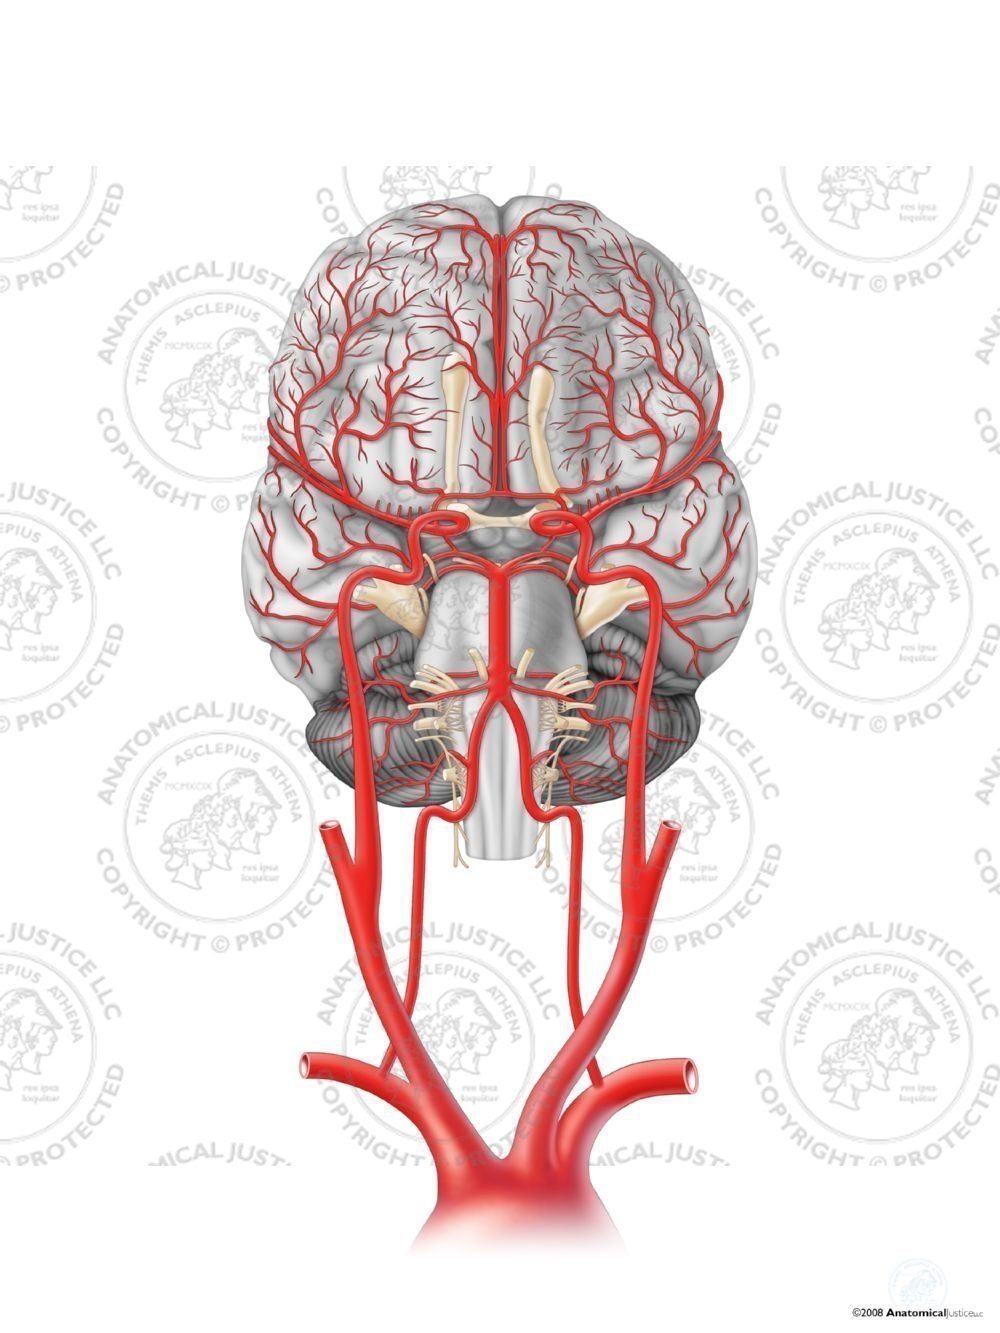 Anteroinferior Arteries of the Brain – No Text